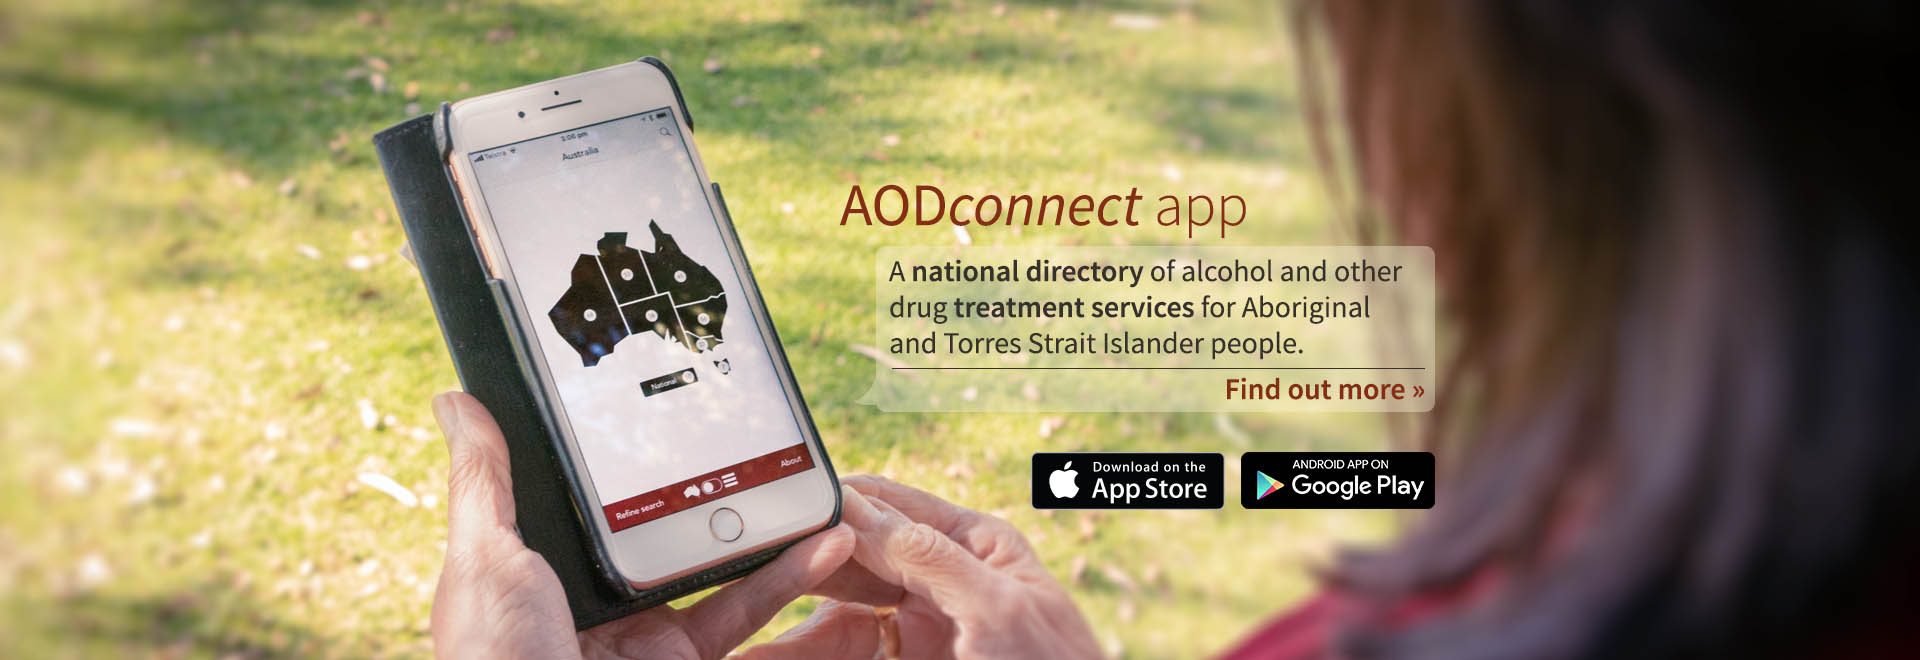 AODconnect app